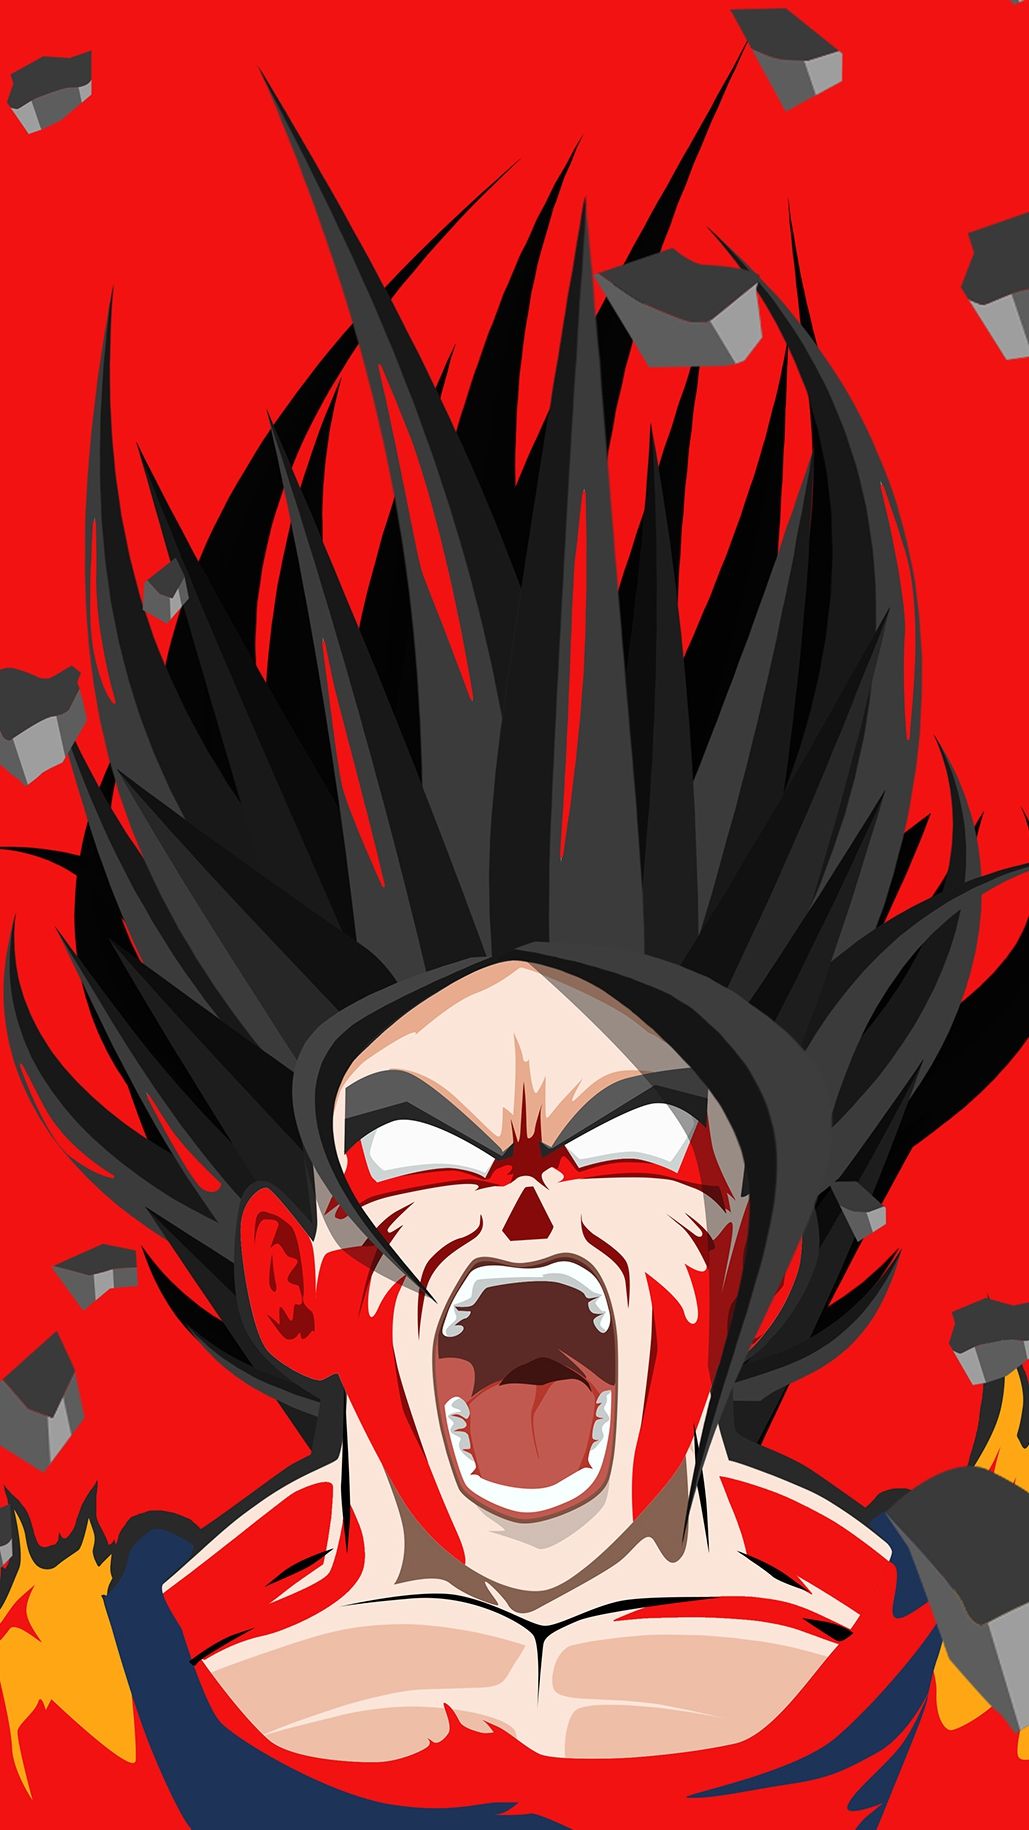 Angry Goku Dragon Ball Z Android Wallpaper Wallpaper, iPhone Wallpaper